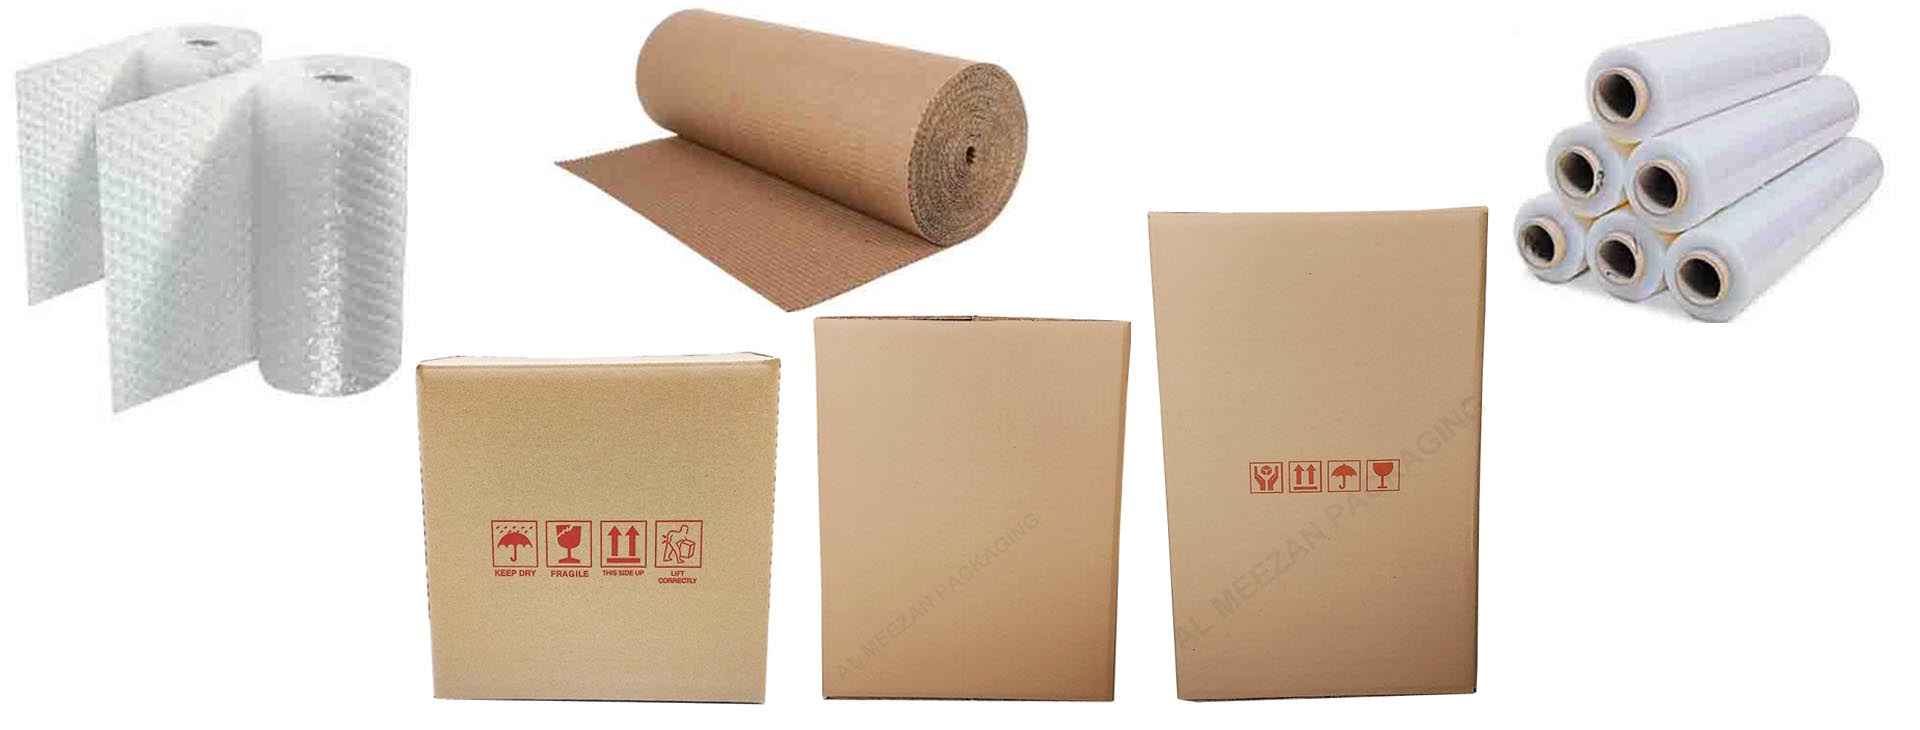 Packaging Materials Dubai